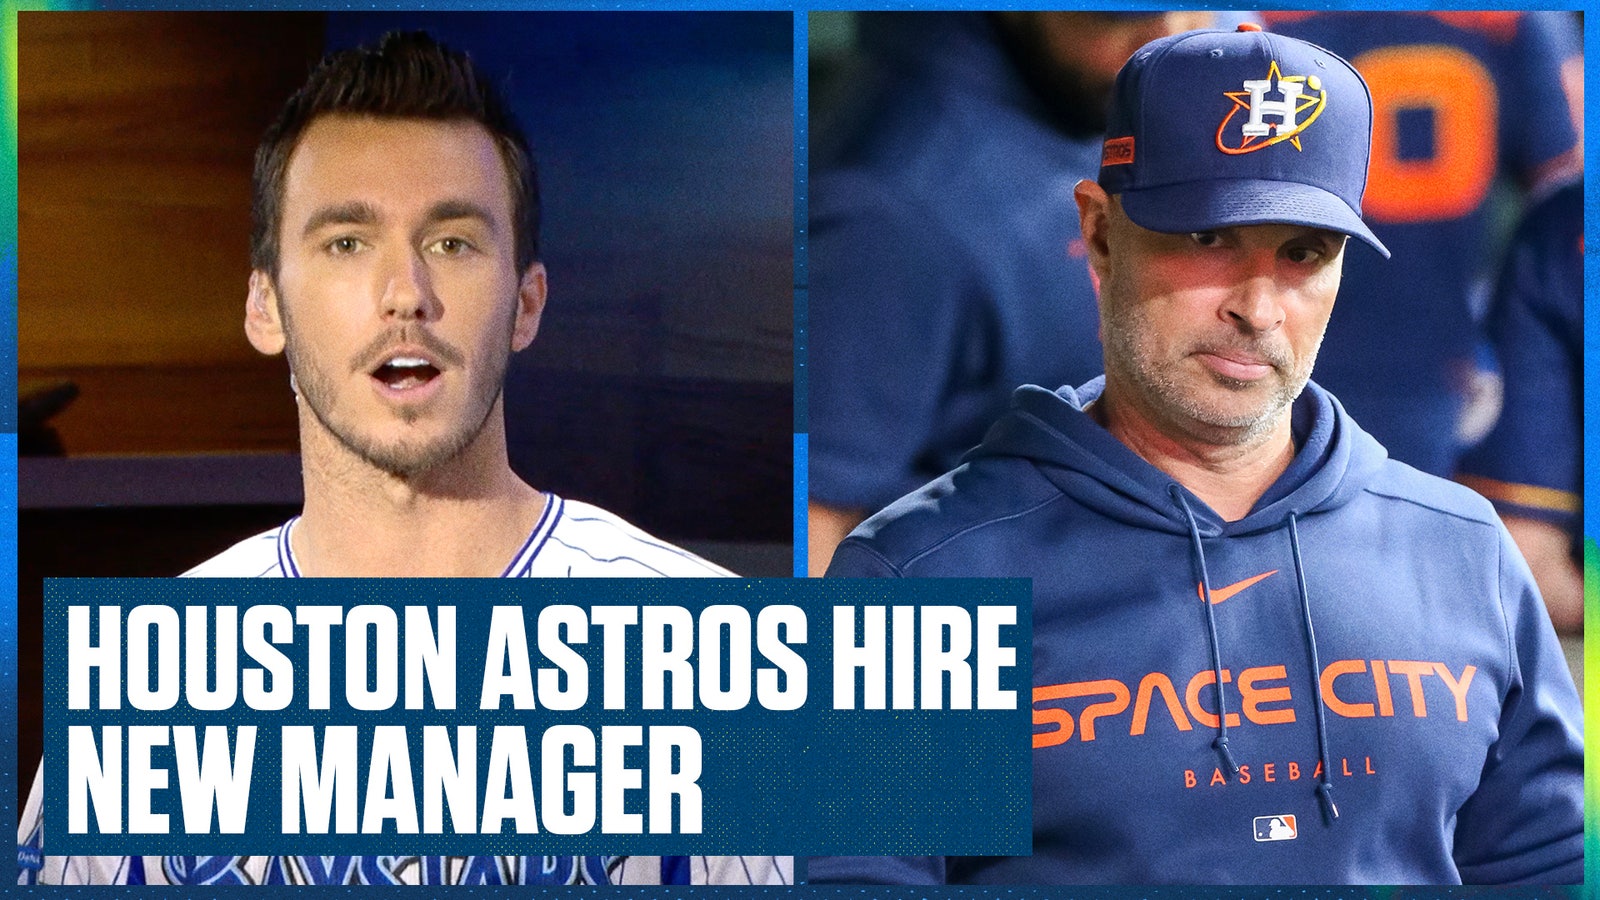 Houston Astros hire long-time bench coach Joe Espada as their new manager